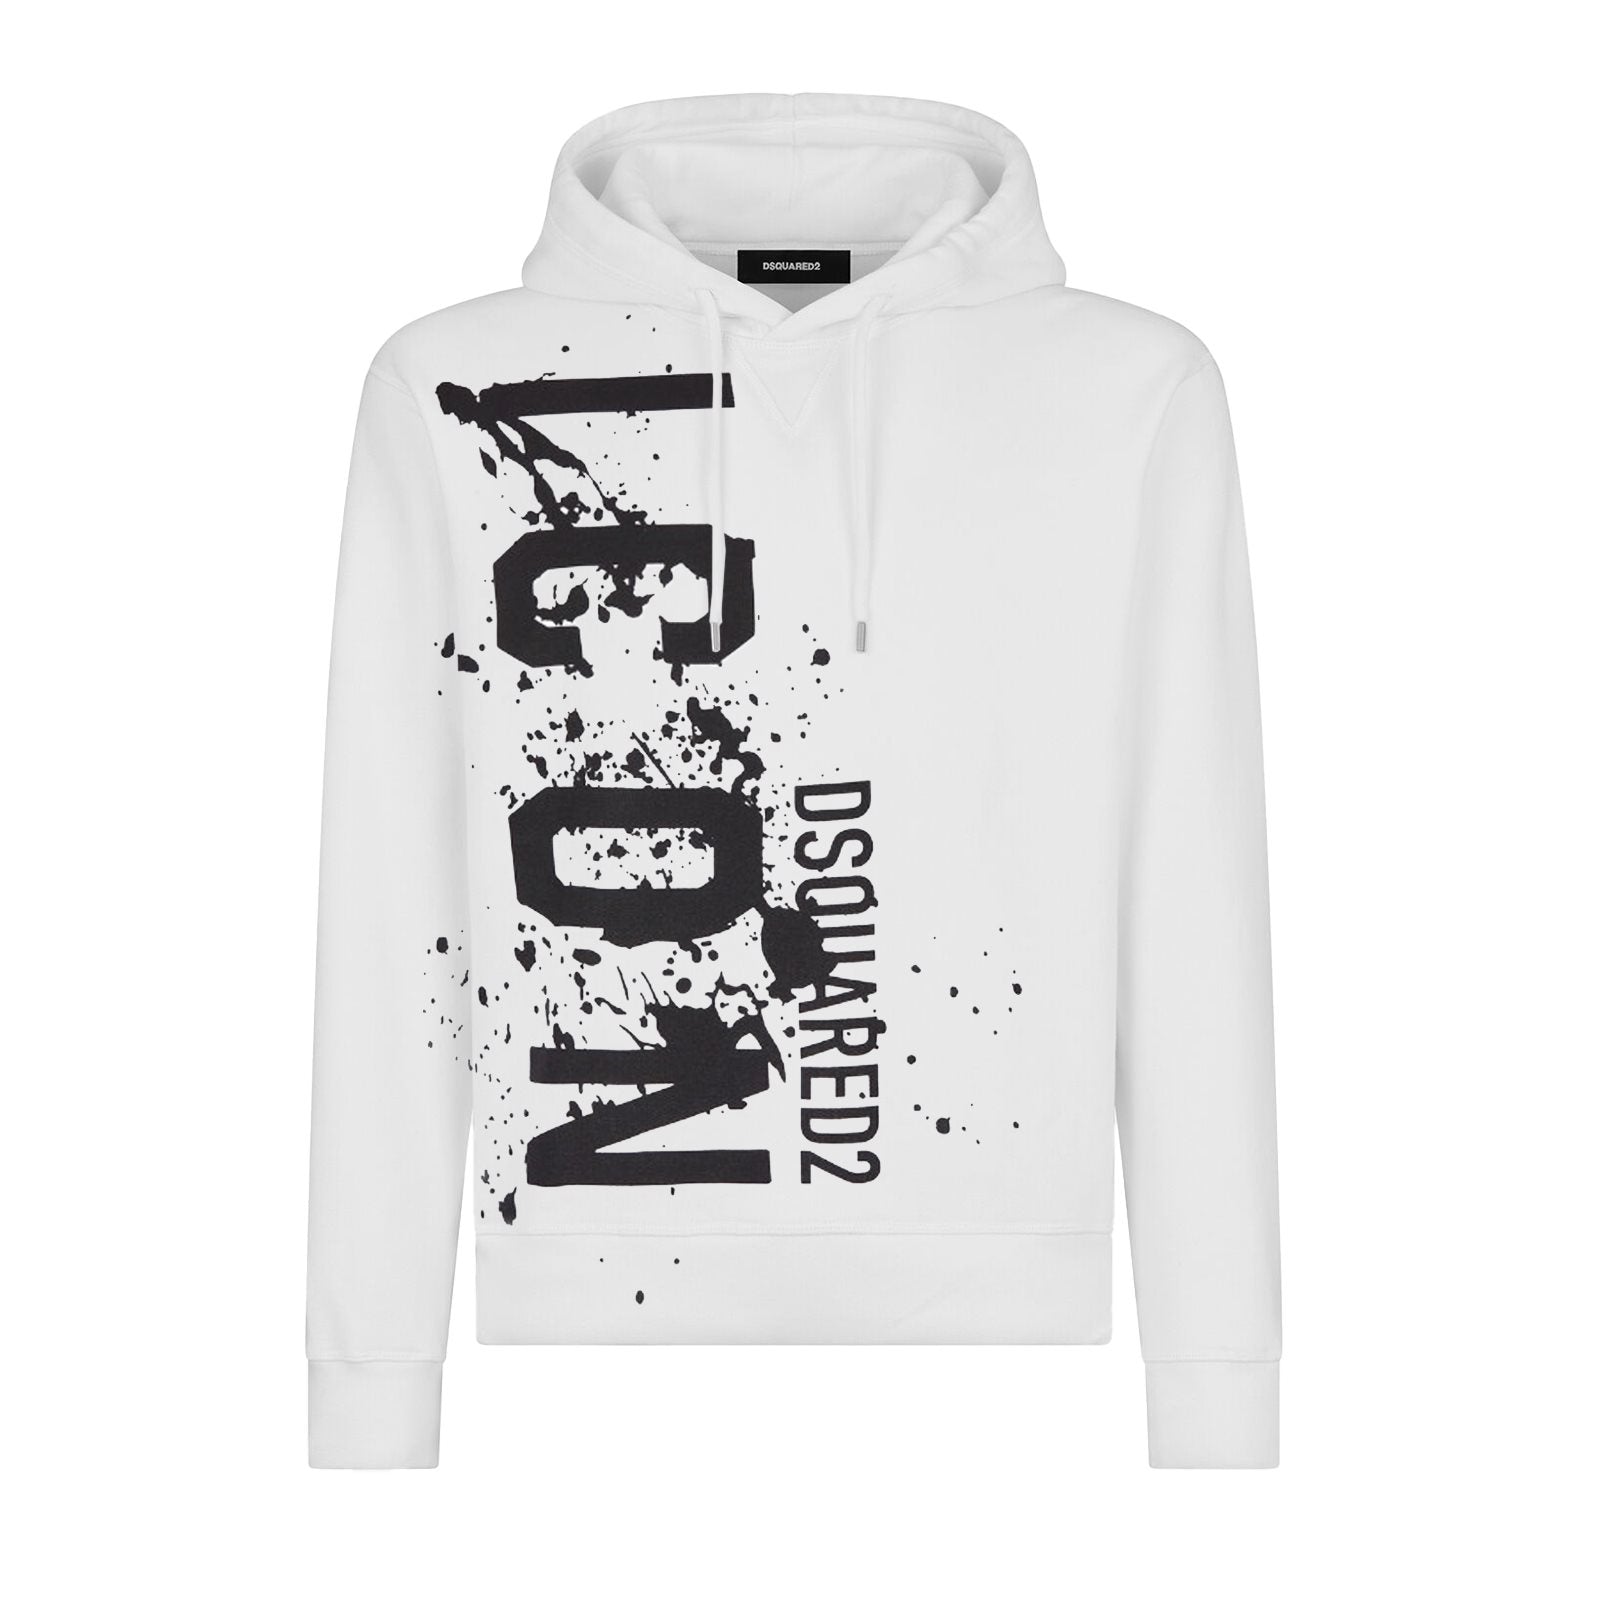 Icon print cool fit hoodie